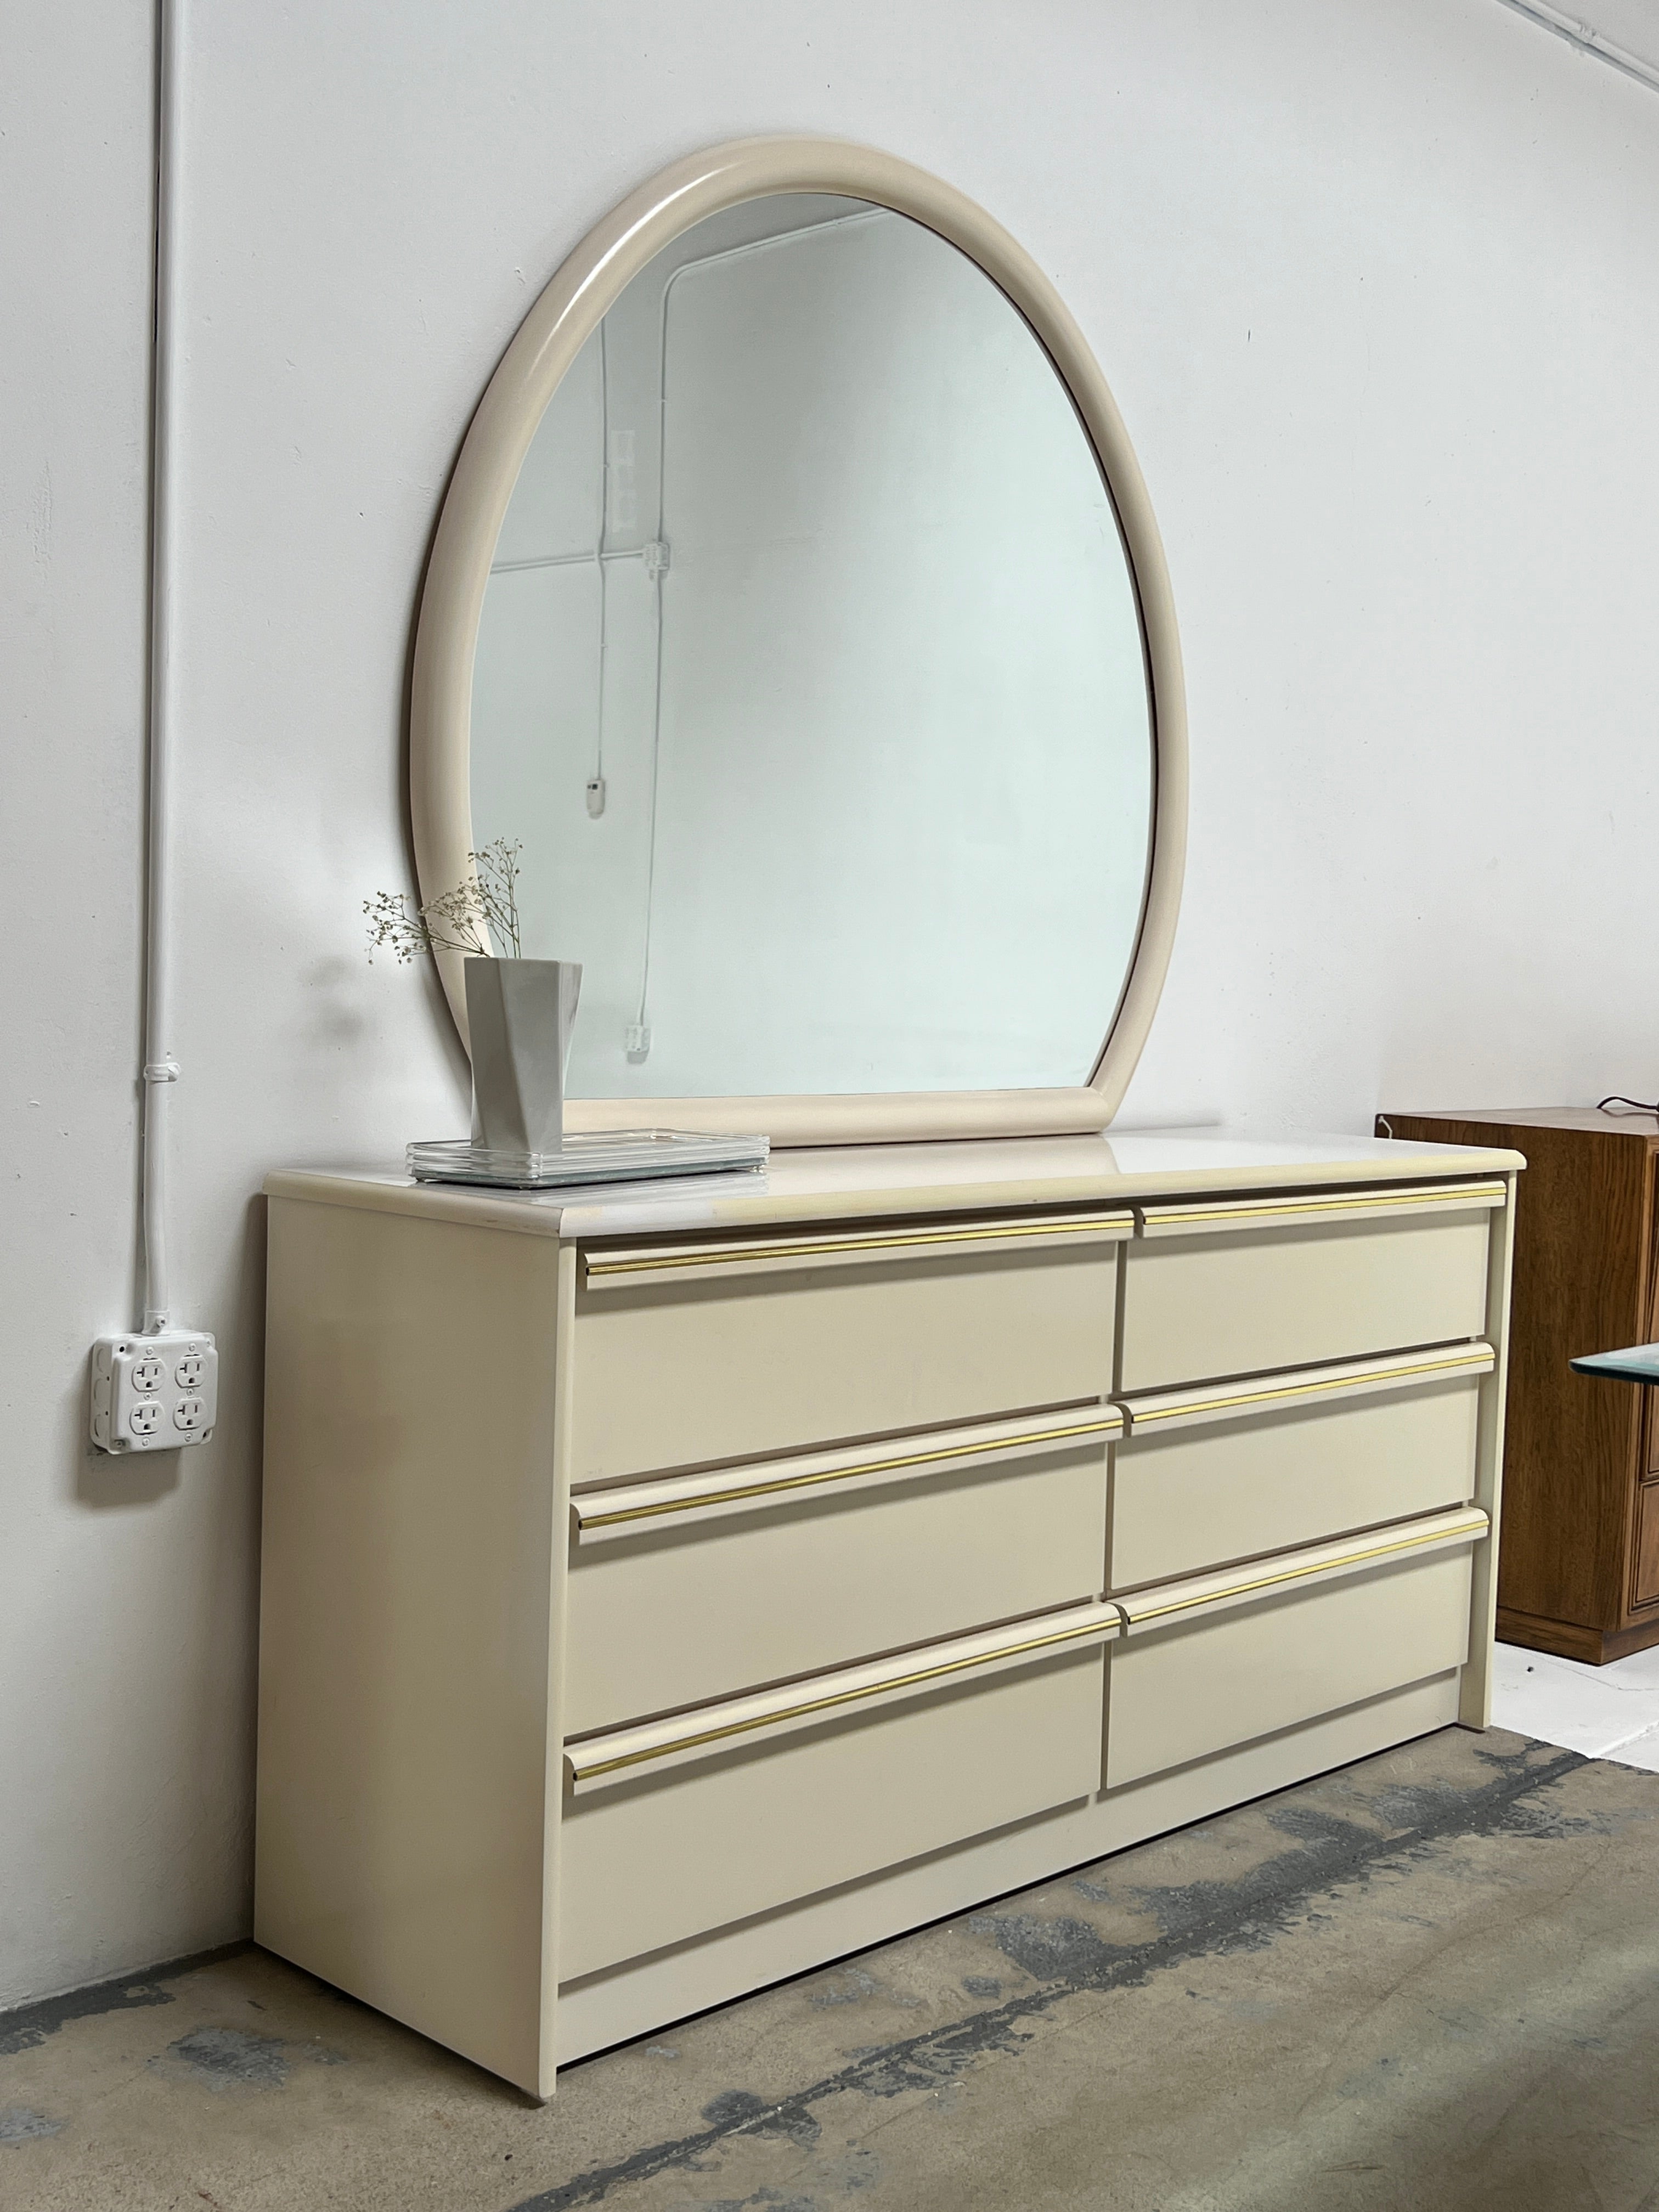 Lowboy Dresser with Mirror by Lane